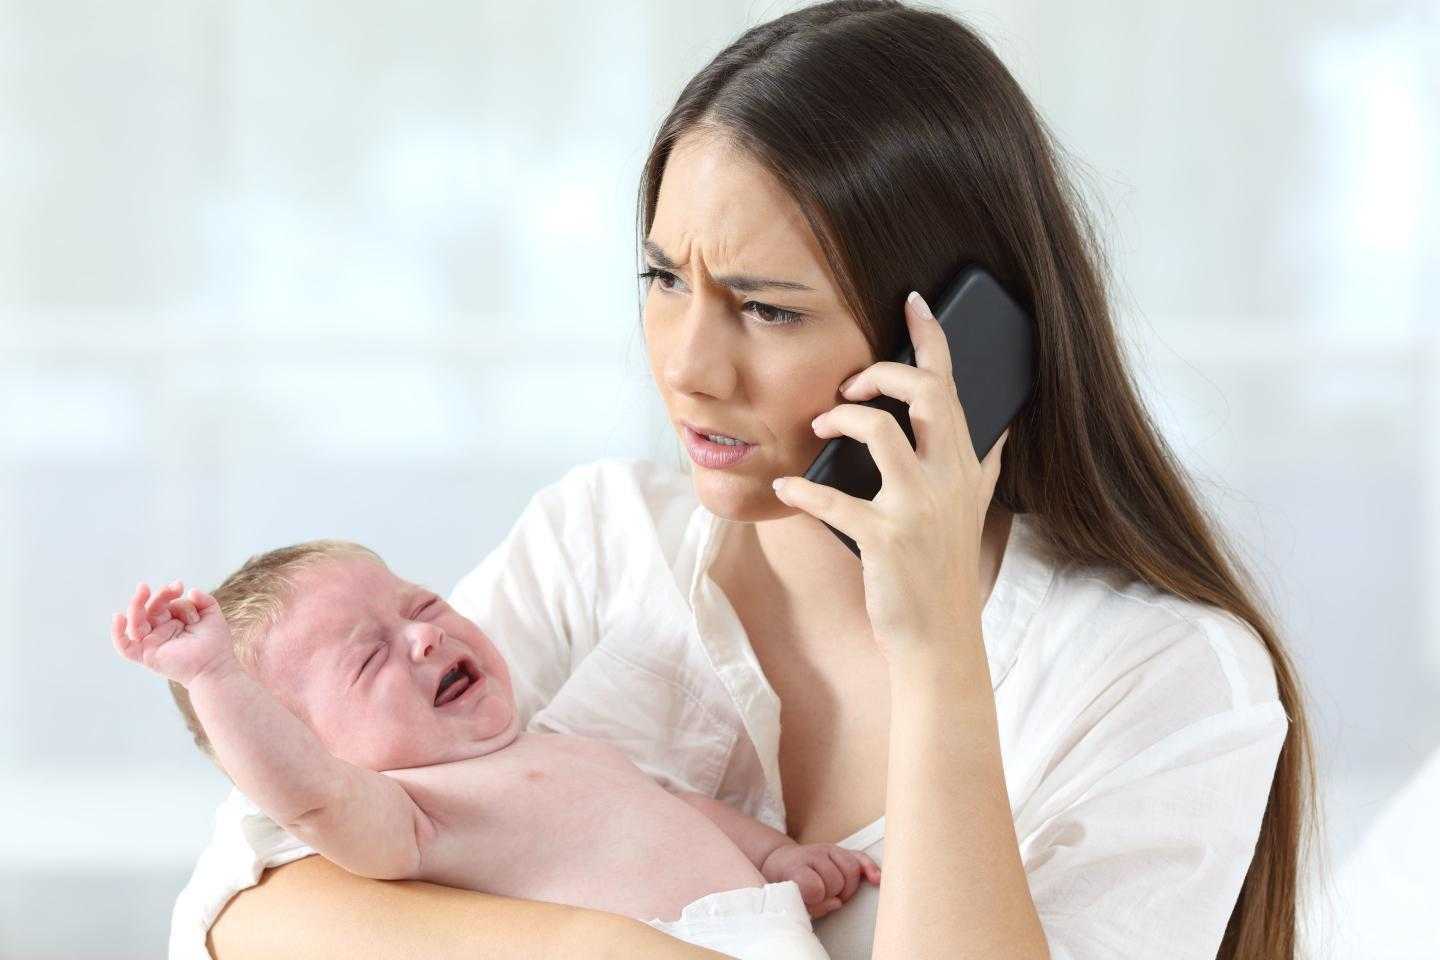 мама взволнована , младенец плачет, звонит врачу